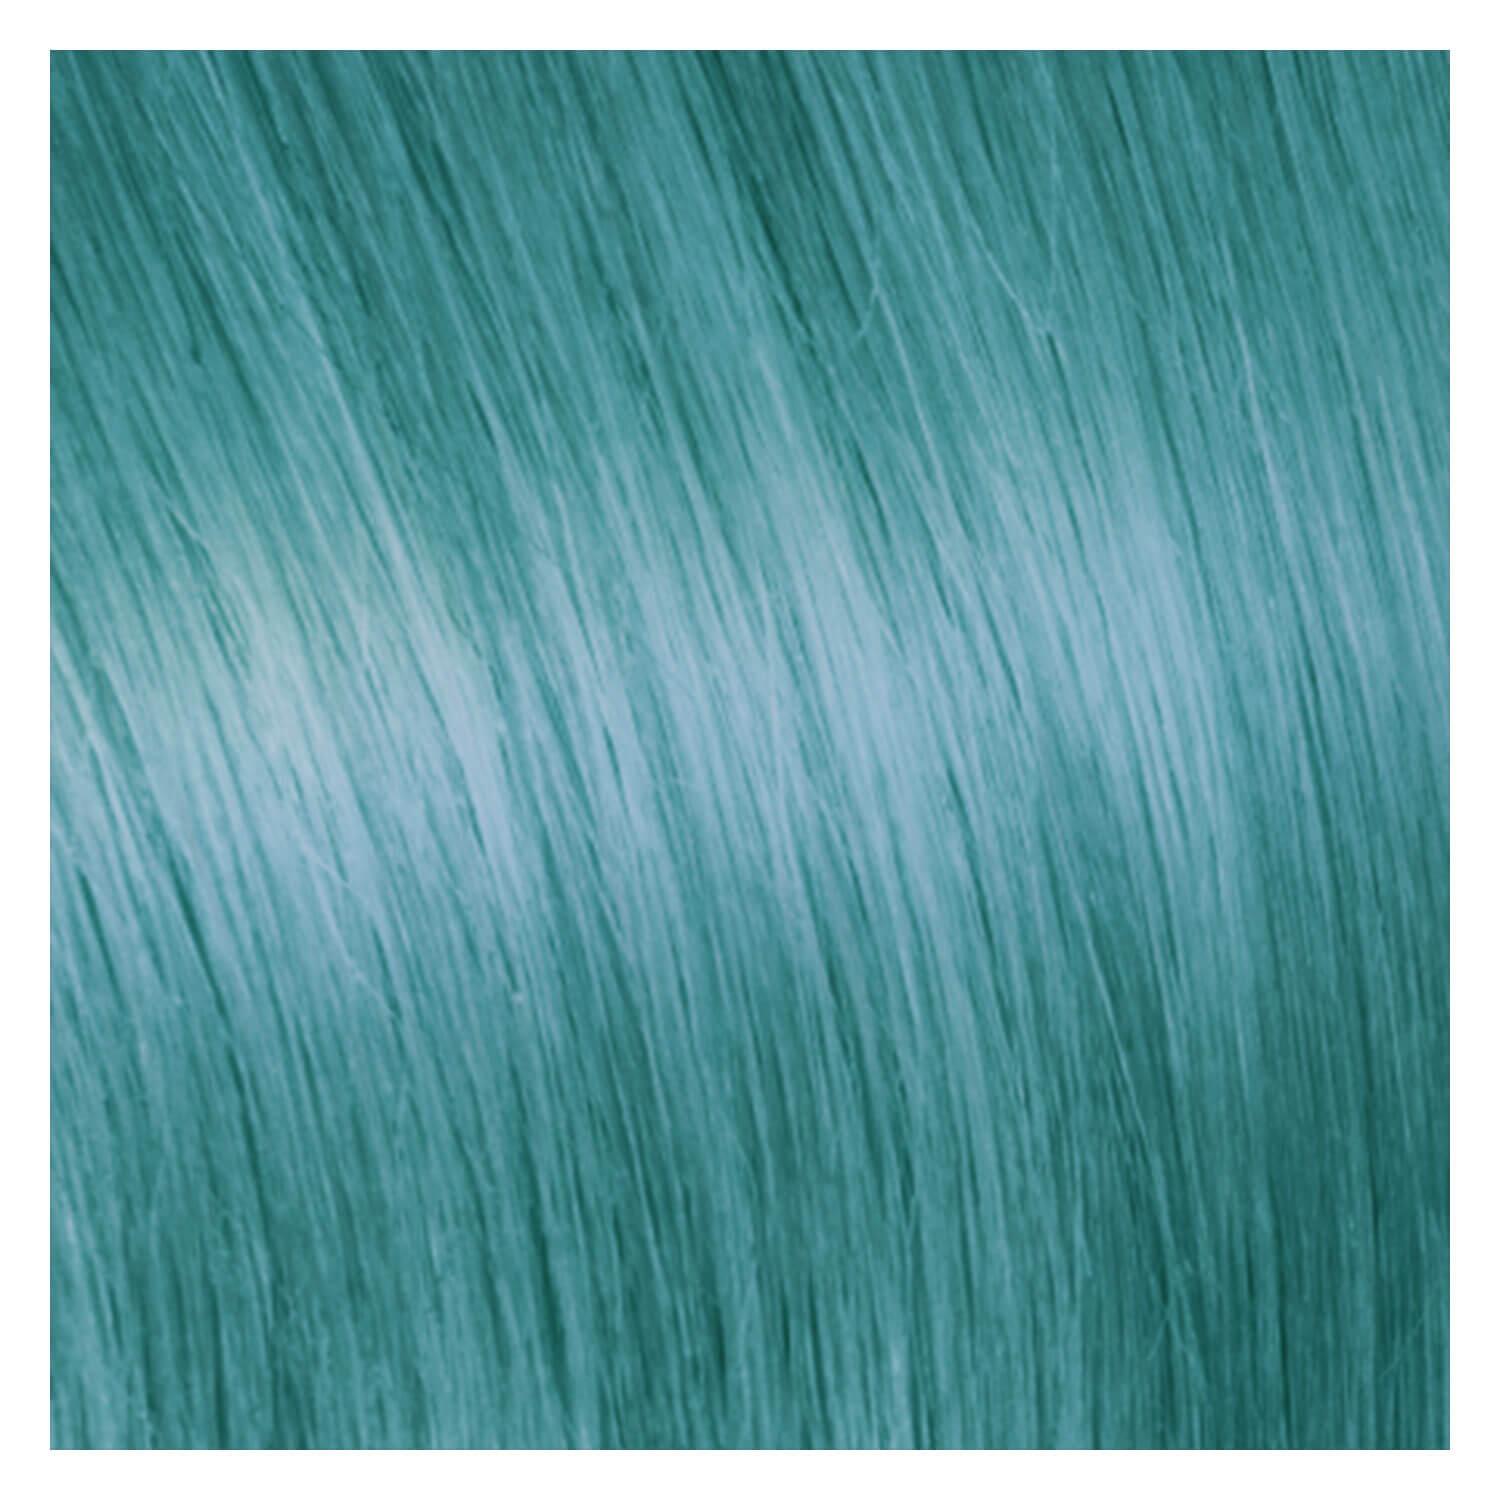 SHE Bonding-System Hair Extensions Fantasy Straight - Turquoise 55/60cm